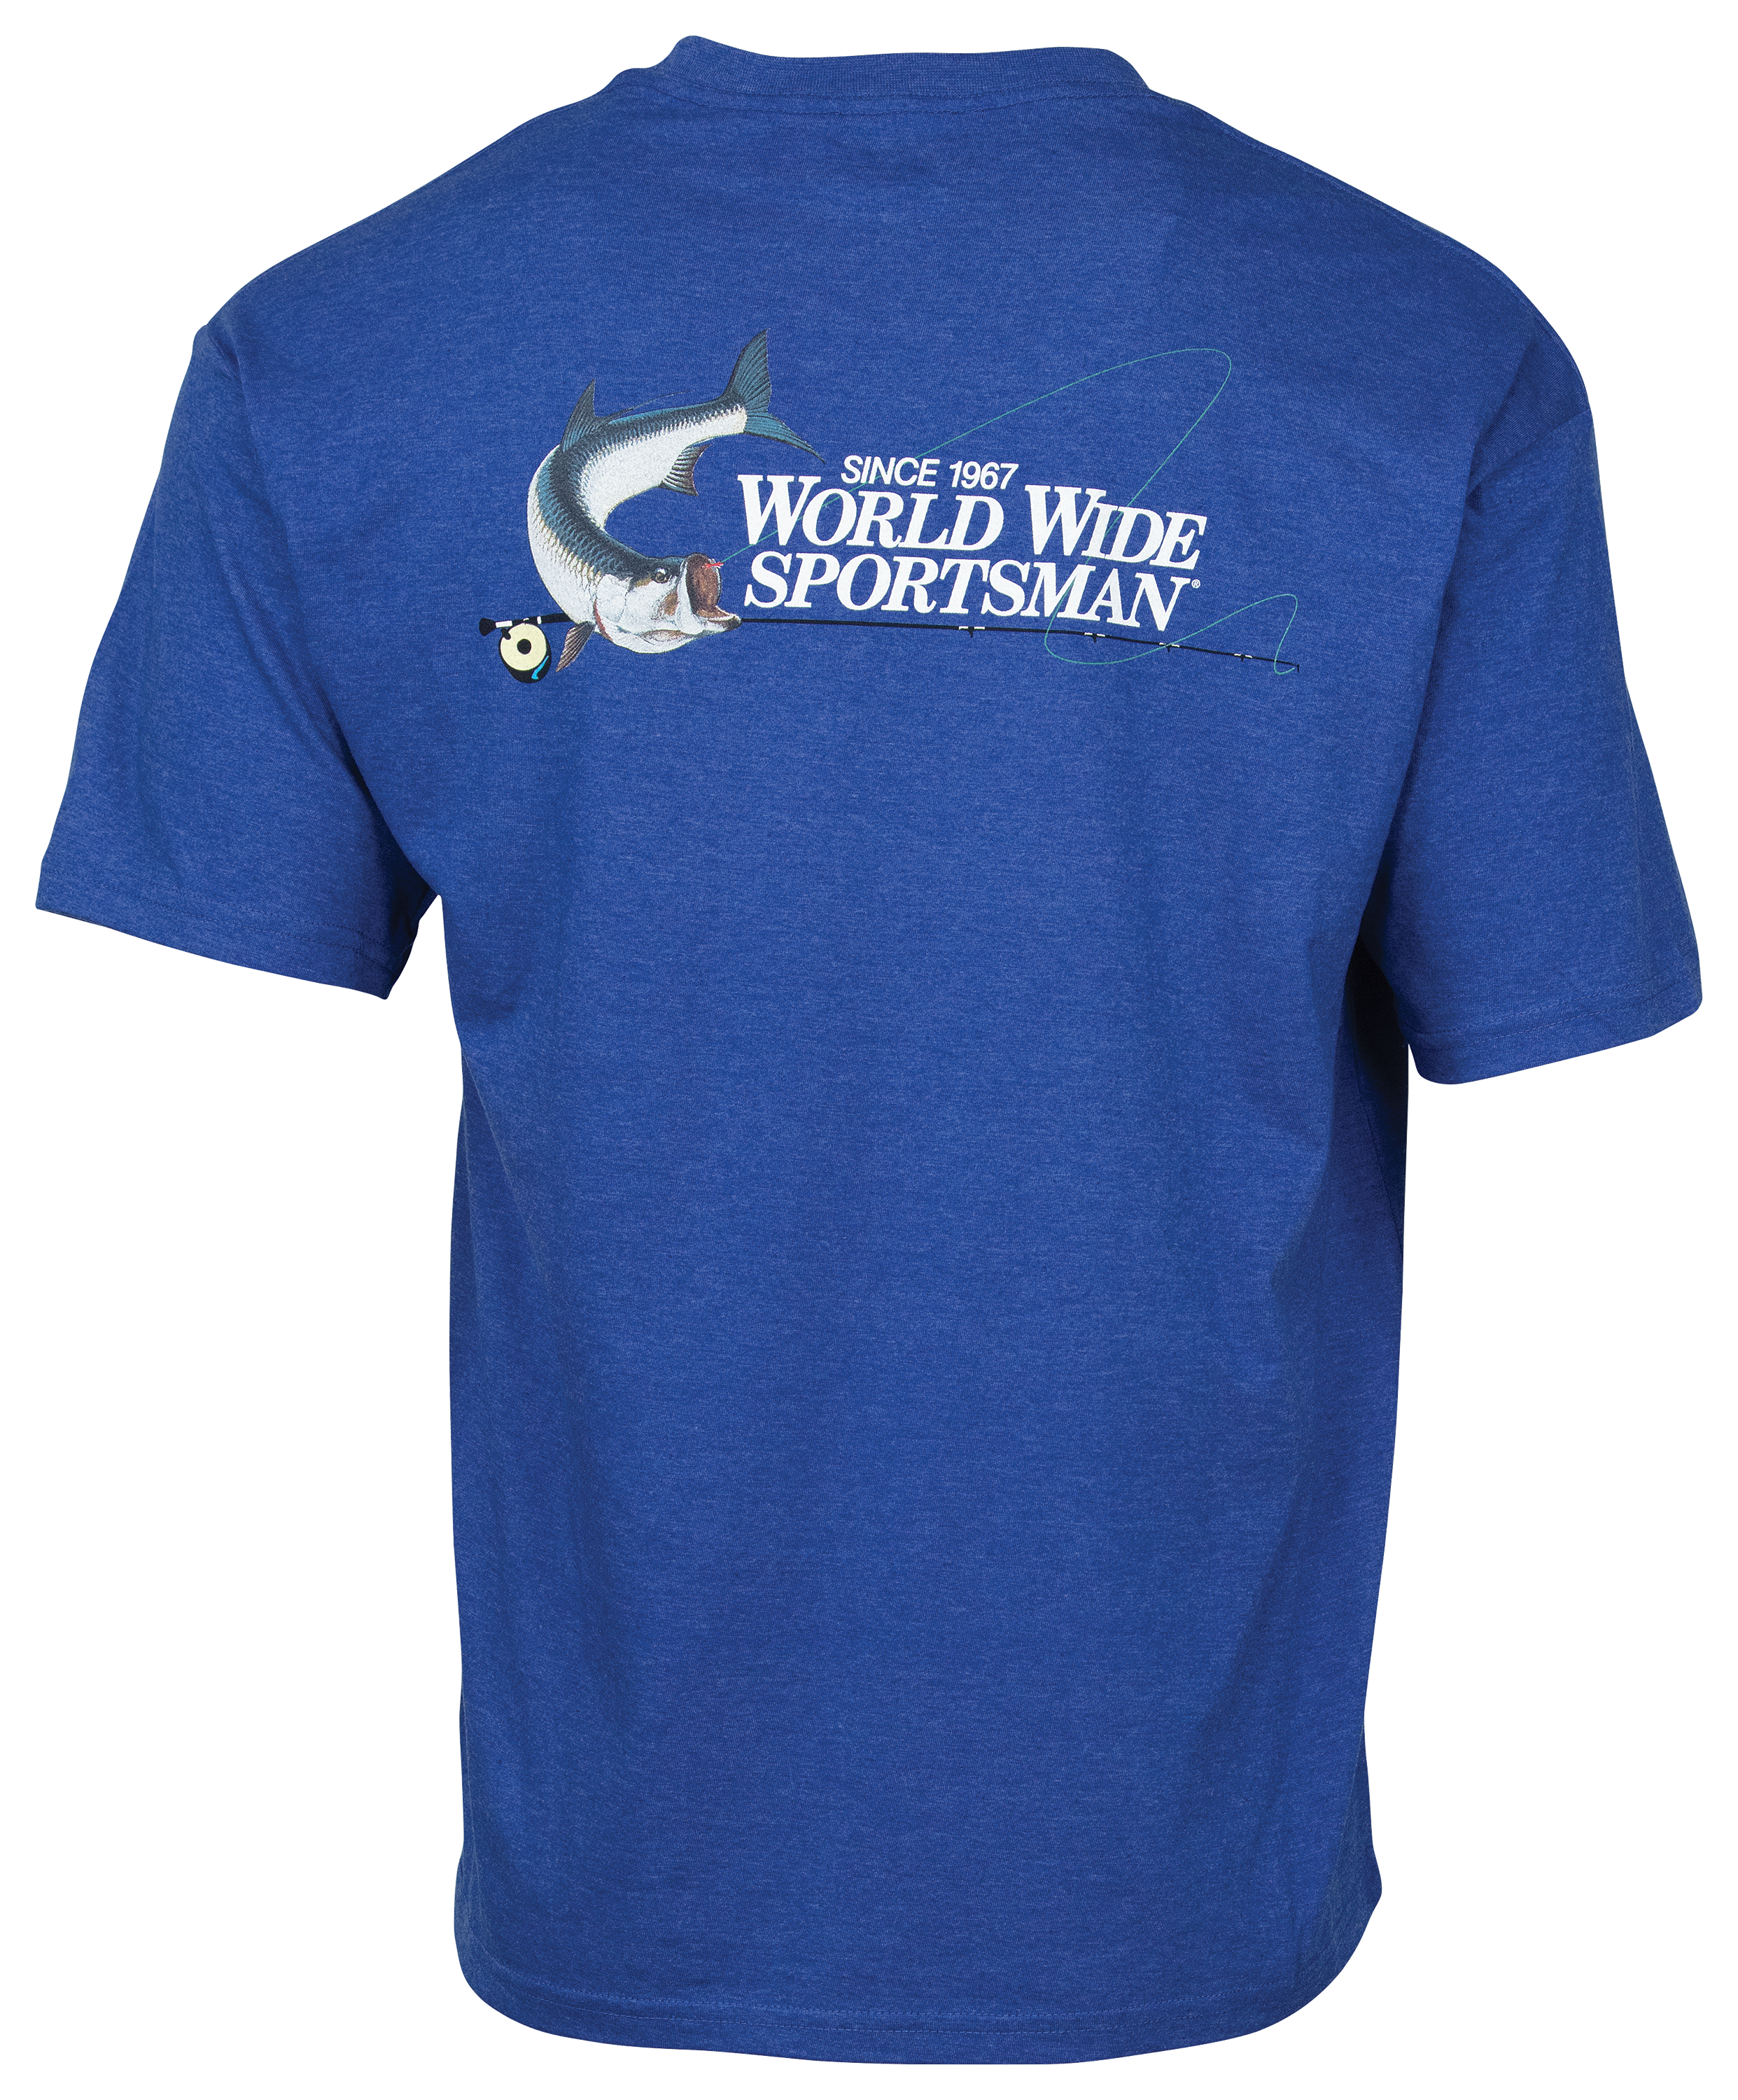 World Wide Sportsman Logo Graphic Short-Sleeve T-Shirt for Men - Royal Blue - L